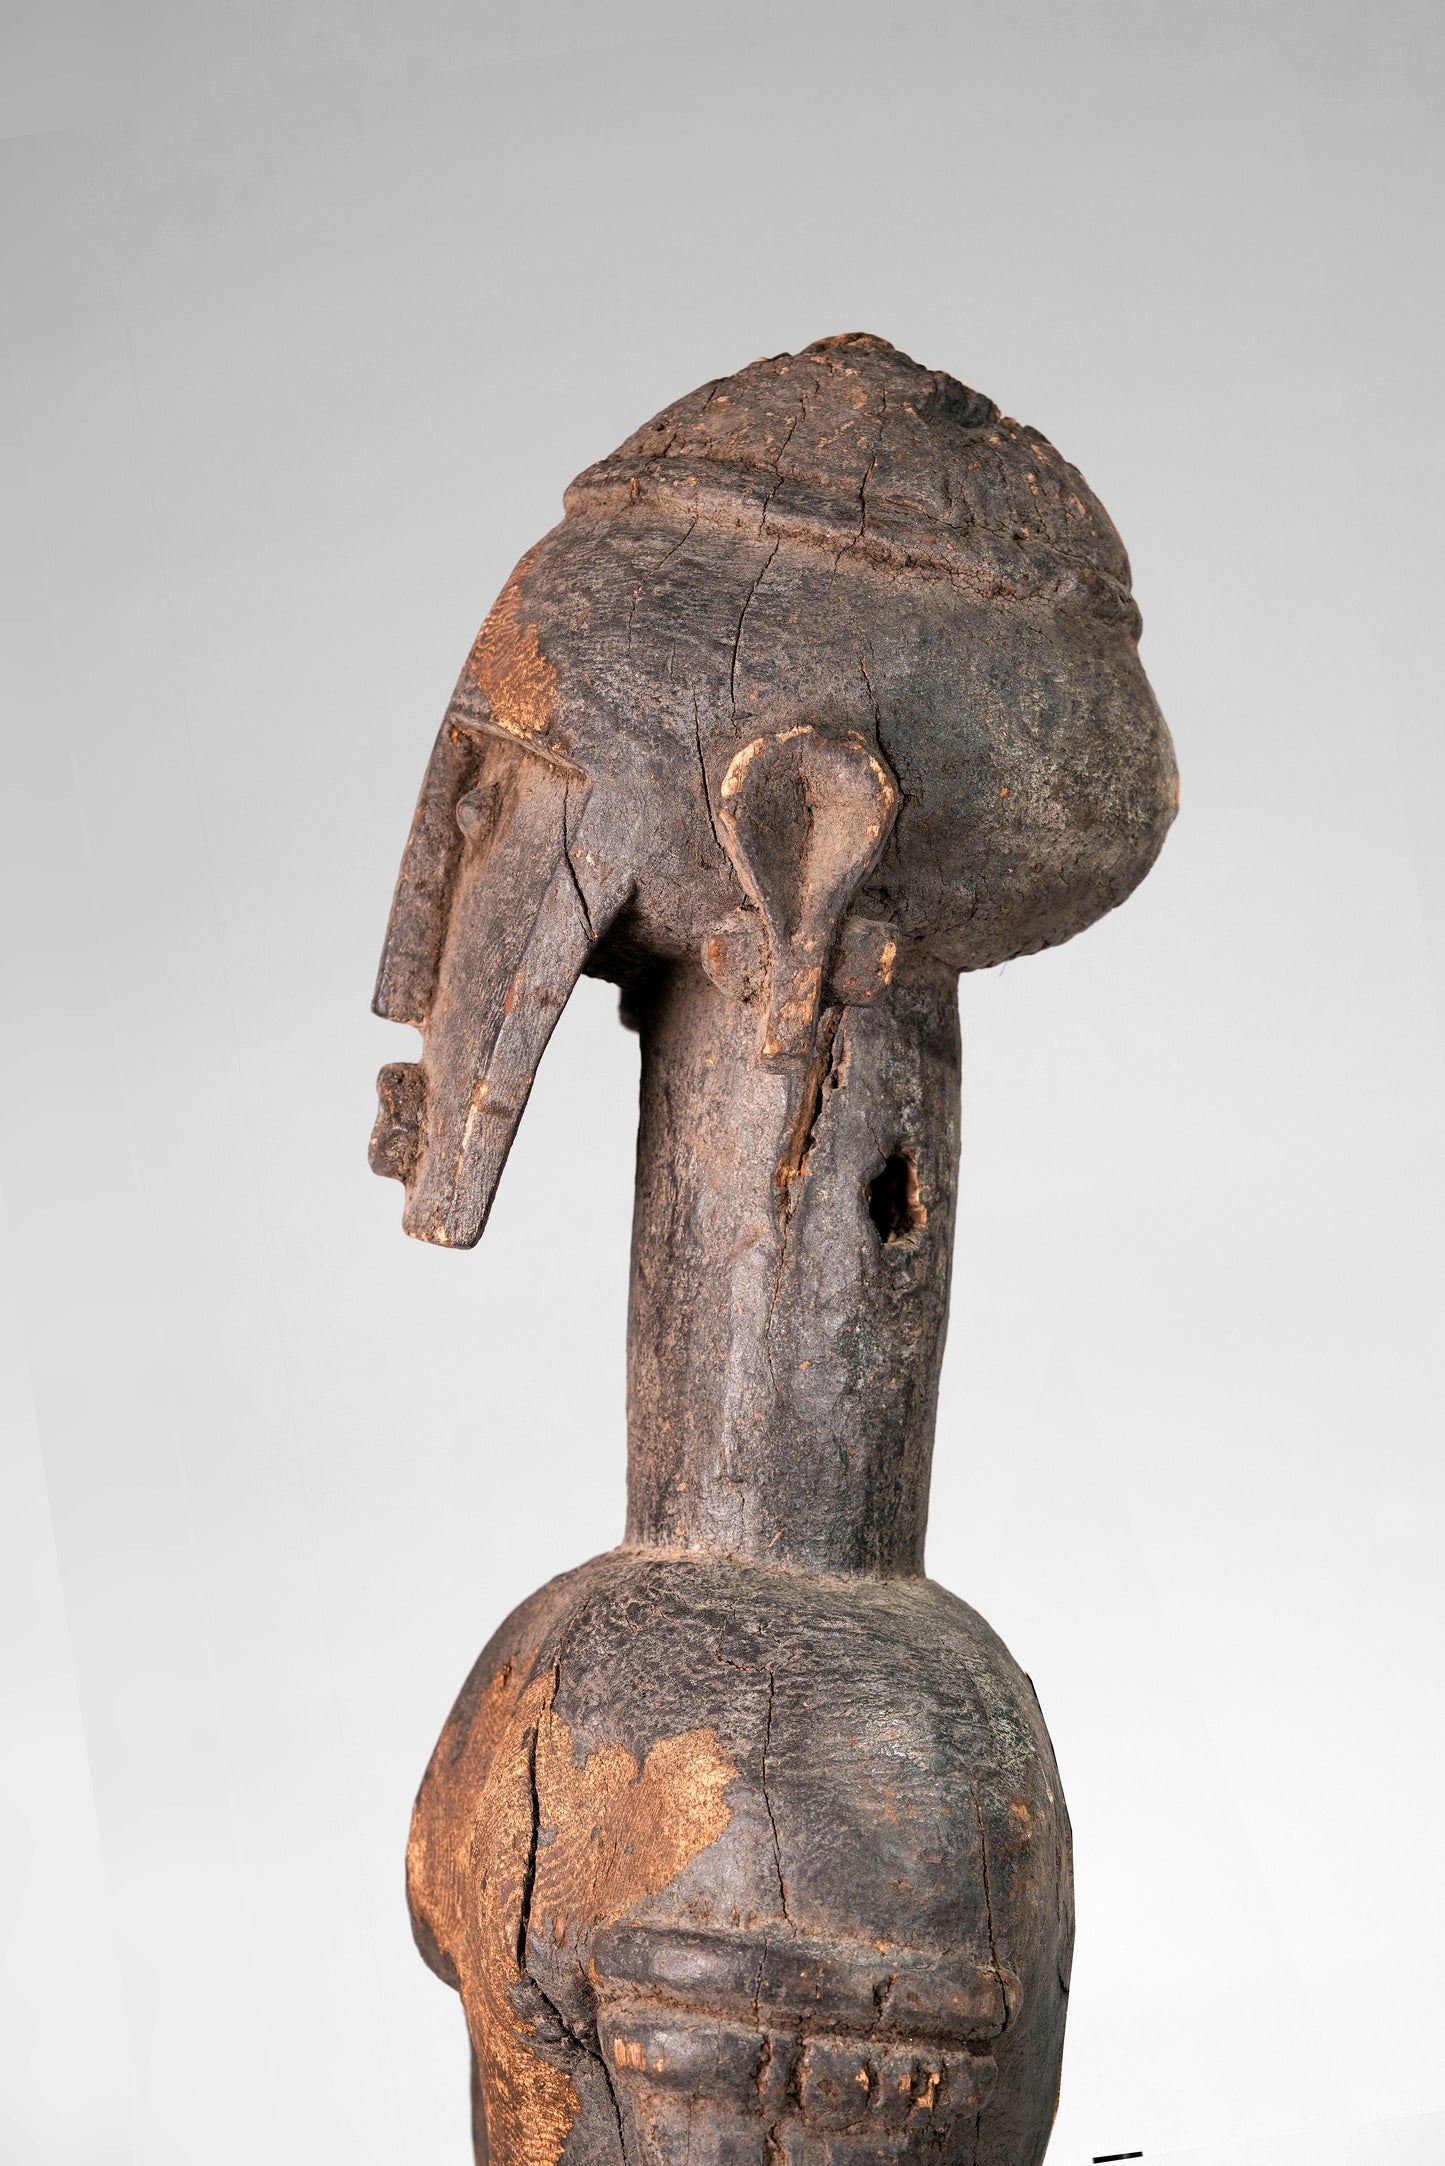 A fragmentary Jukun sculpture